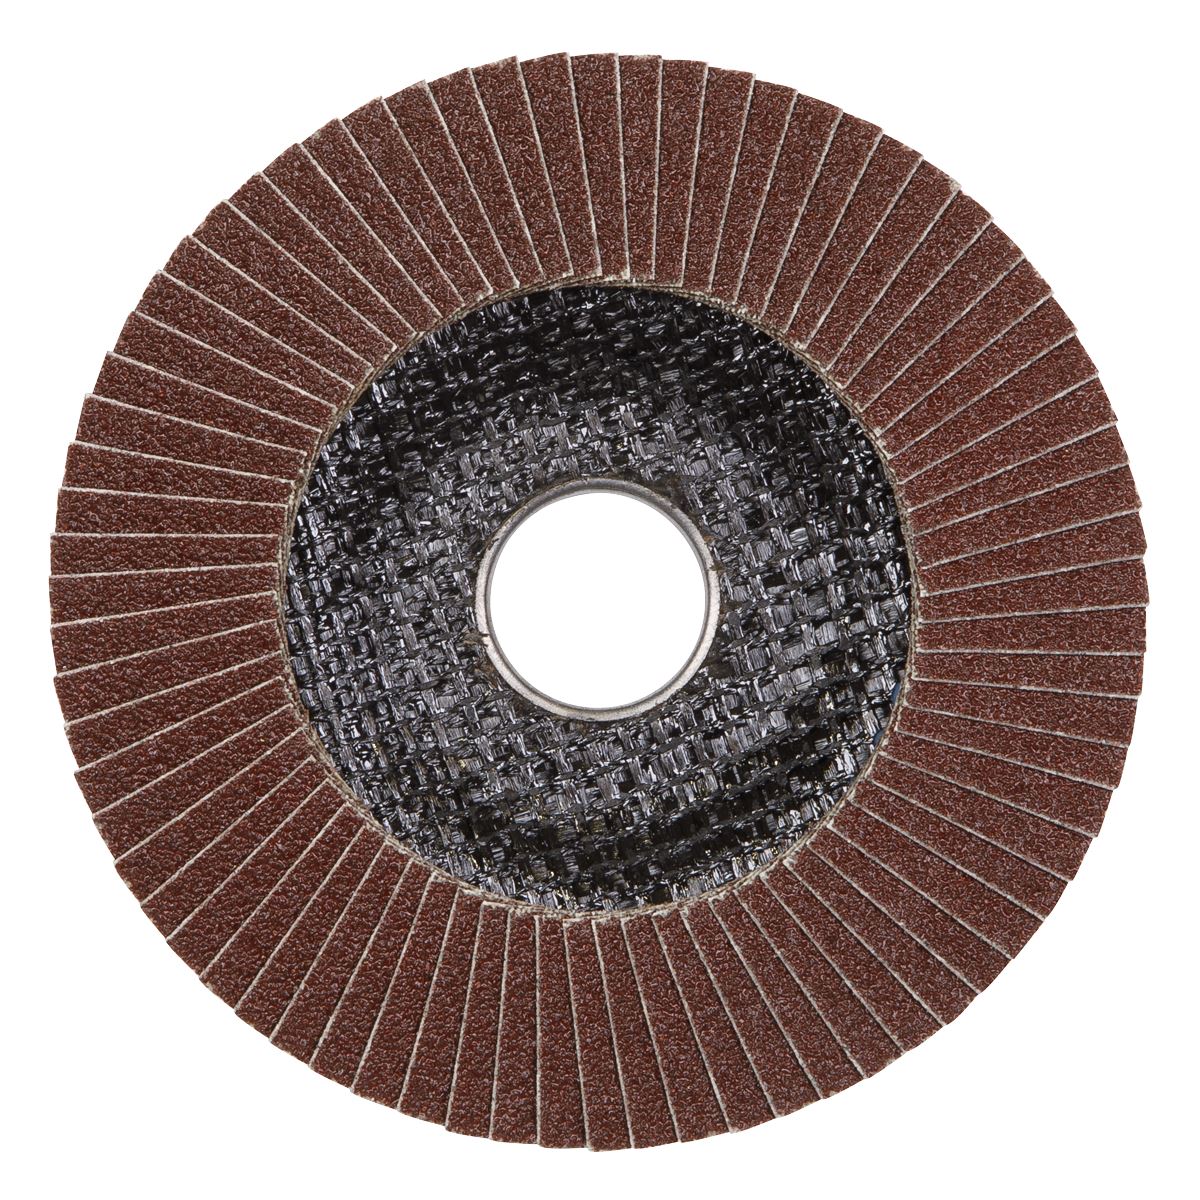 Sealey Flap Disc Aluminium Oxide Ø115mm Ø22mm Bore 80Grit